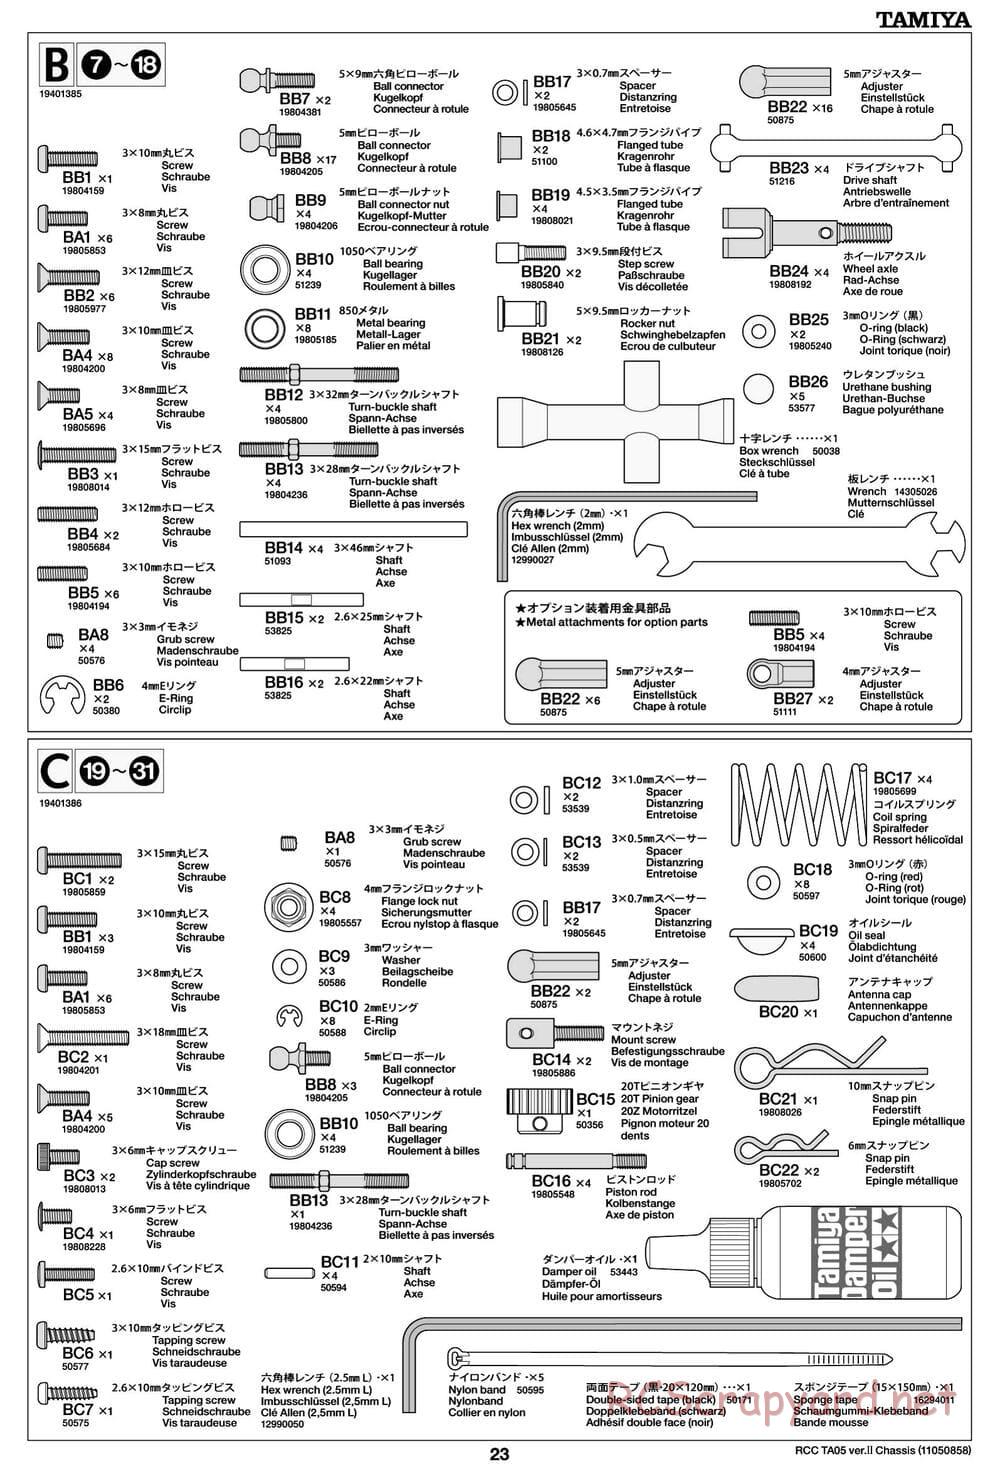 Tamiya - TA05 Ver.II Chassis - Manual - Page 23